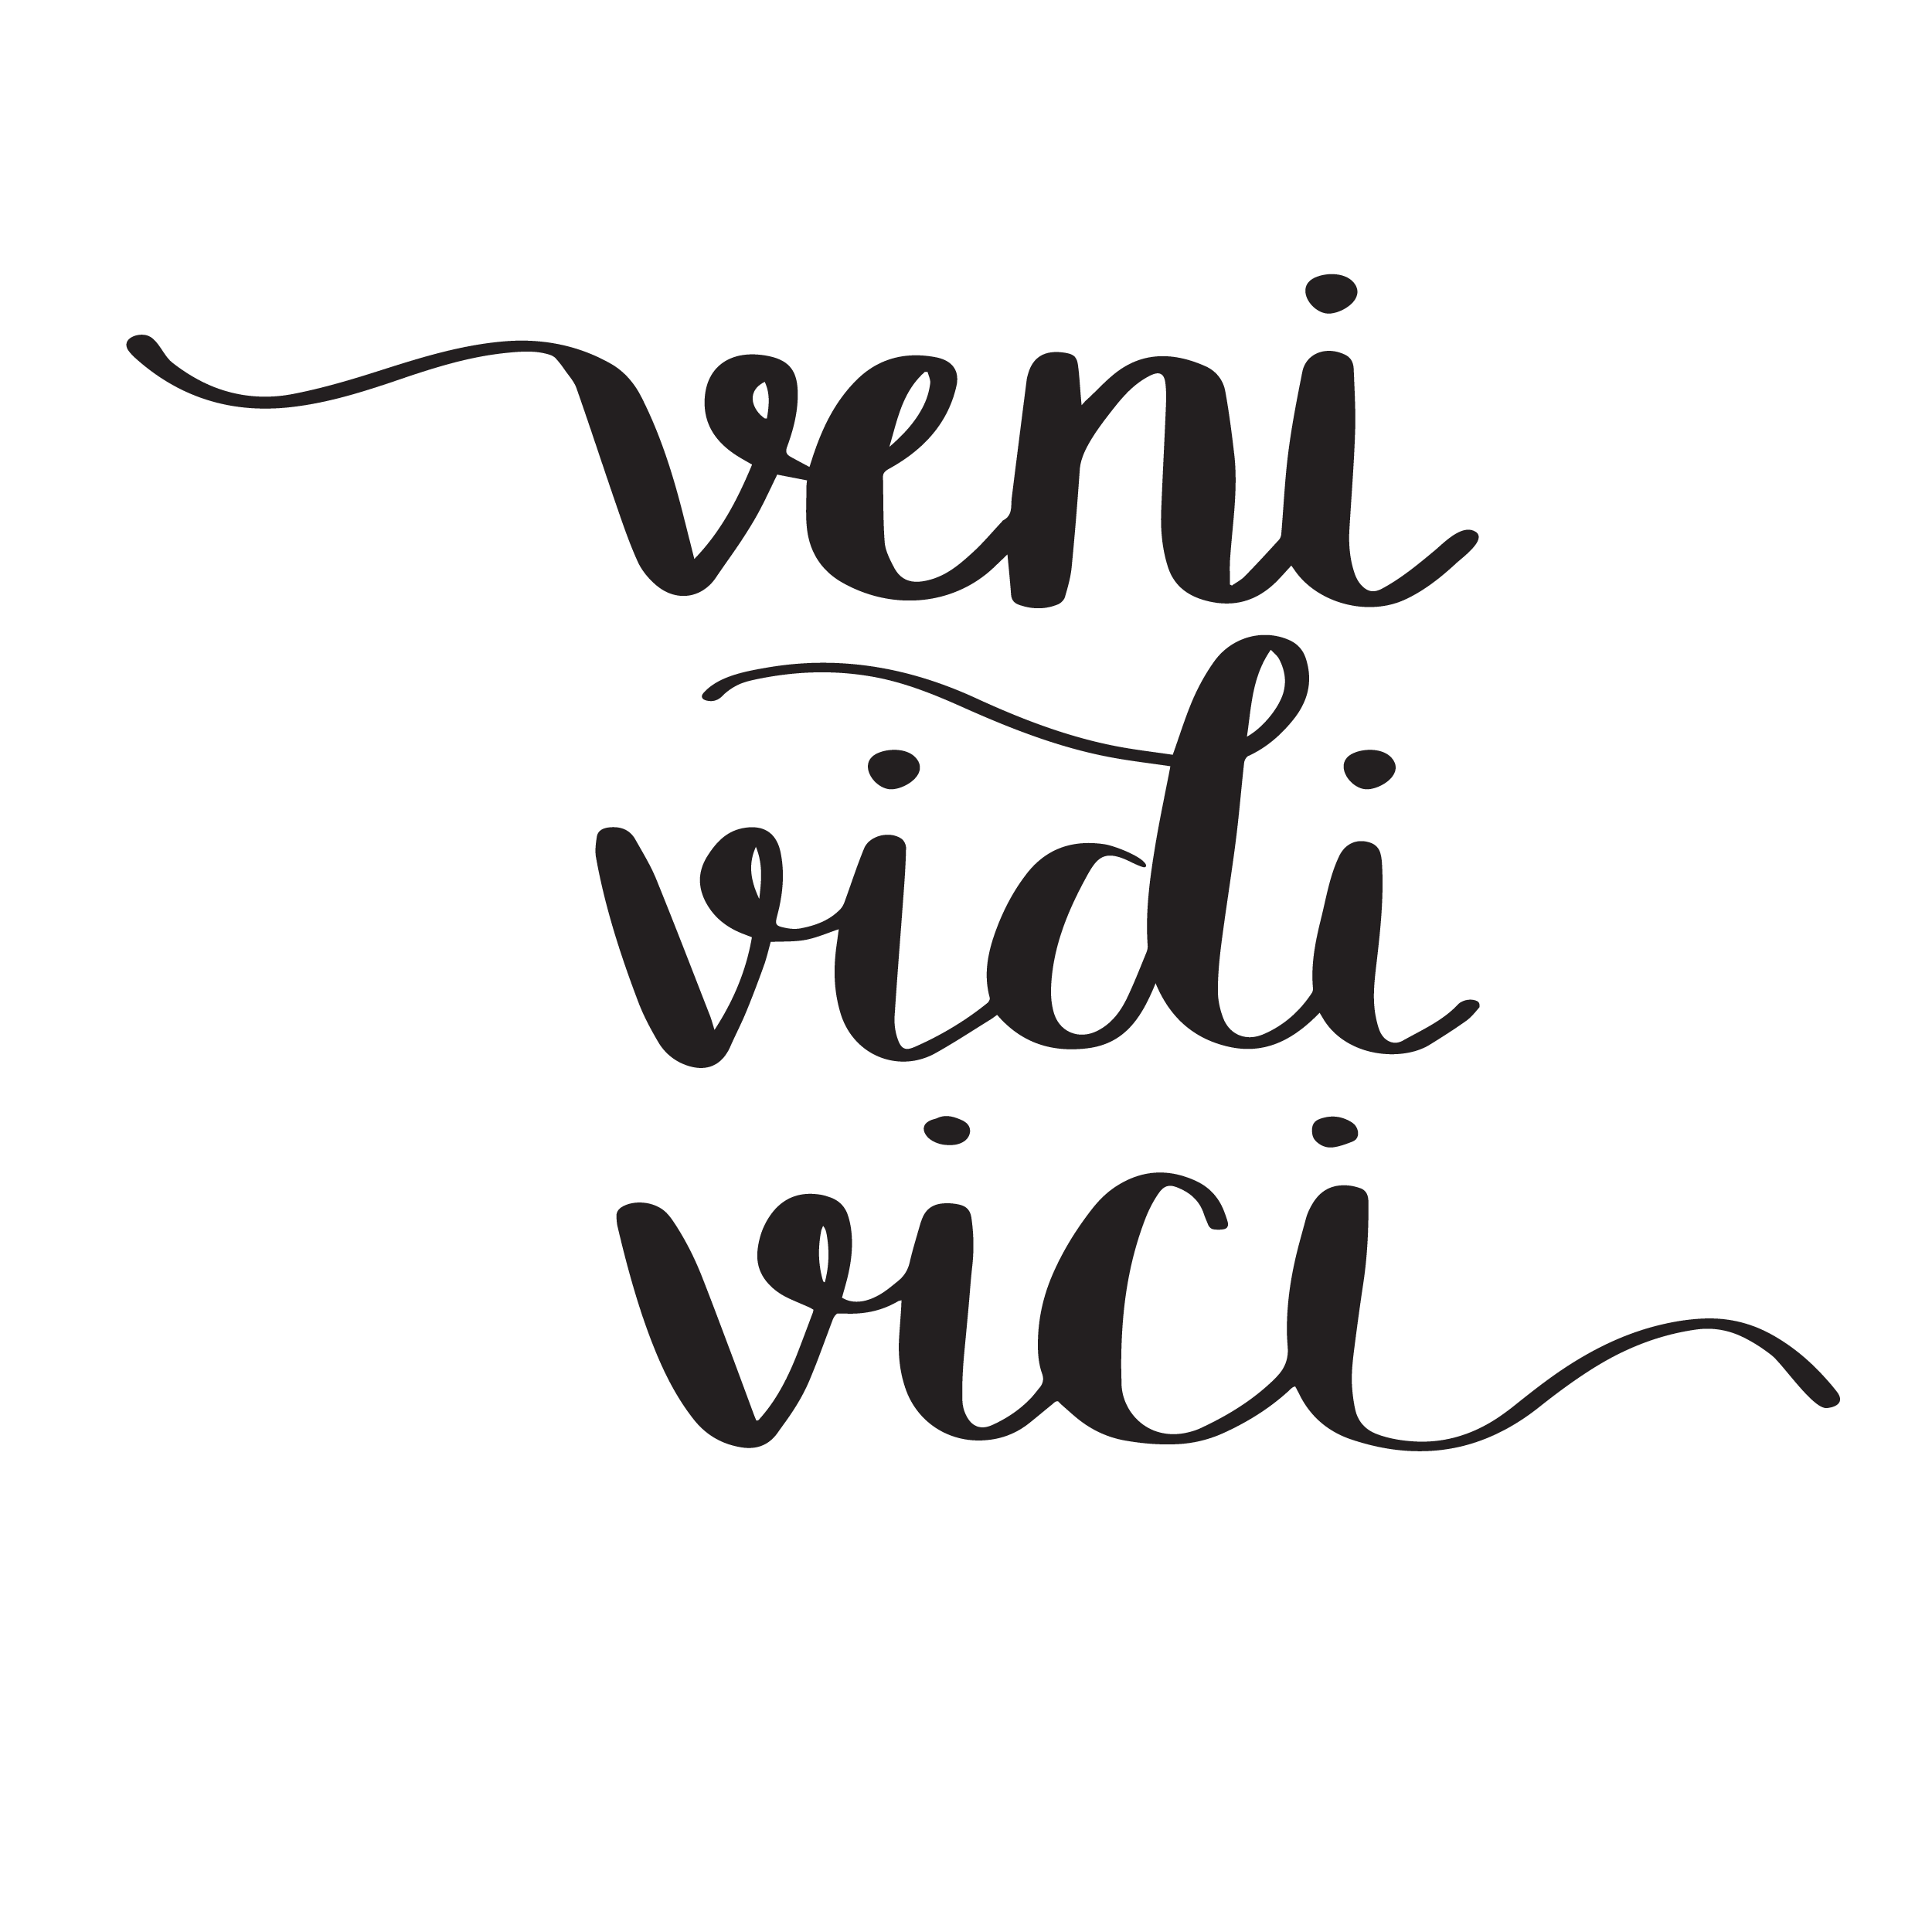 Hand Lettered Veni Vidi Vici Free SVG Cut File